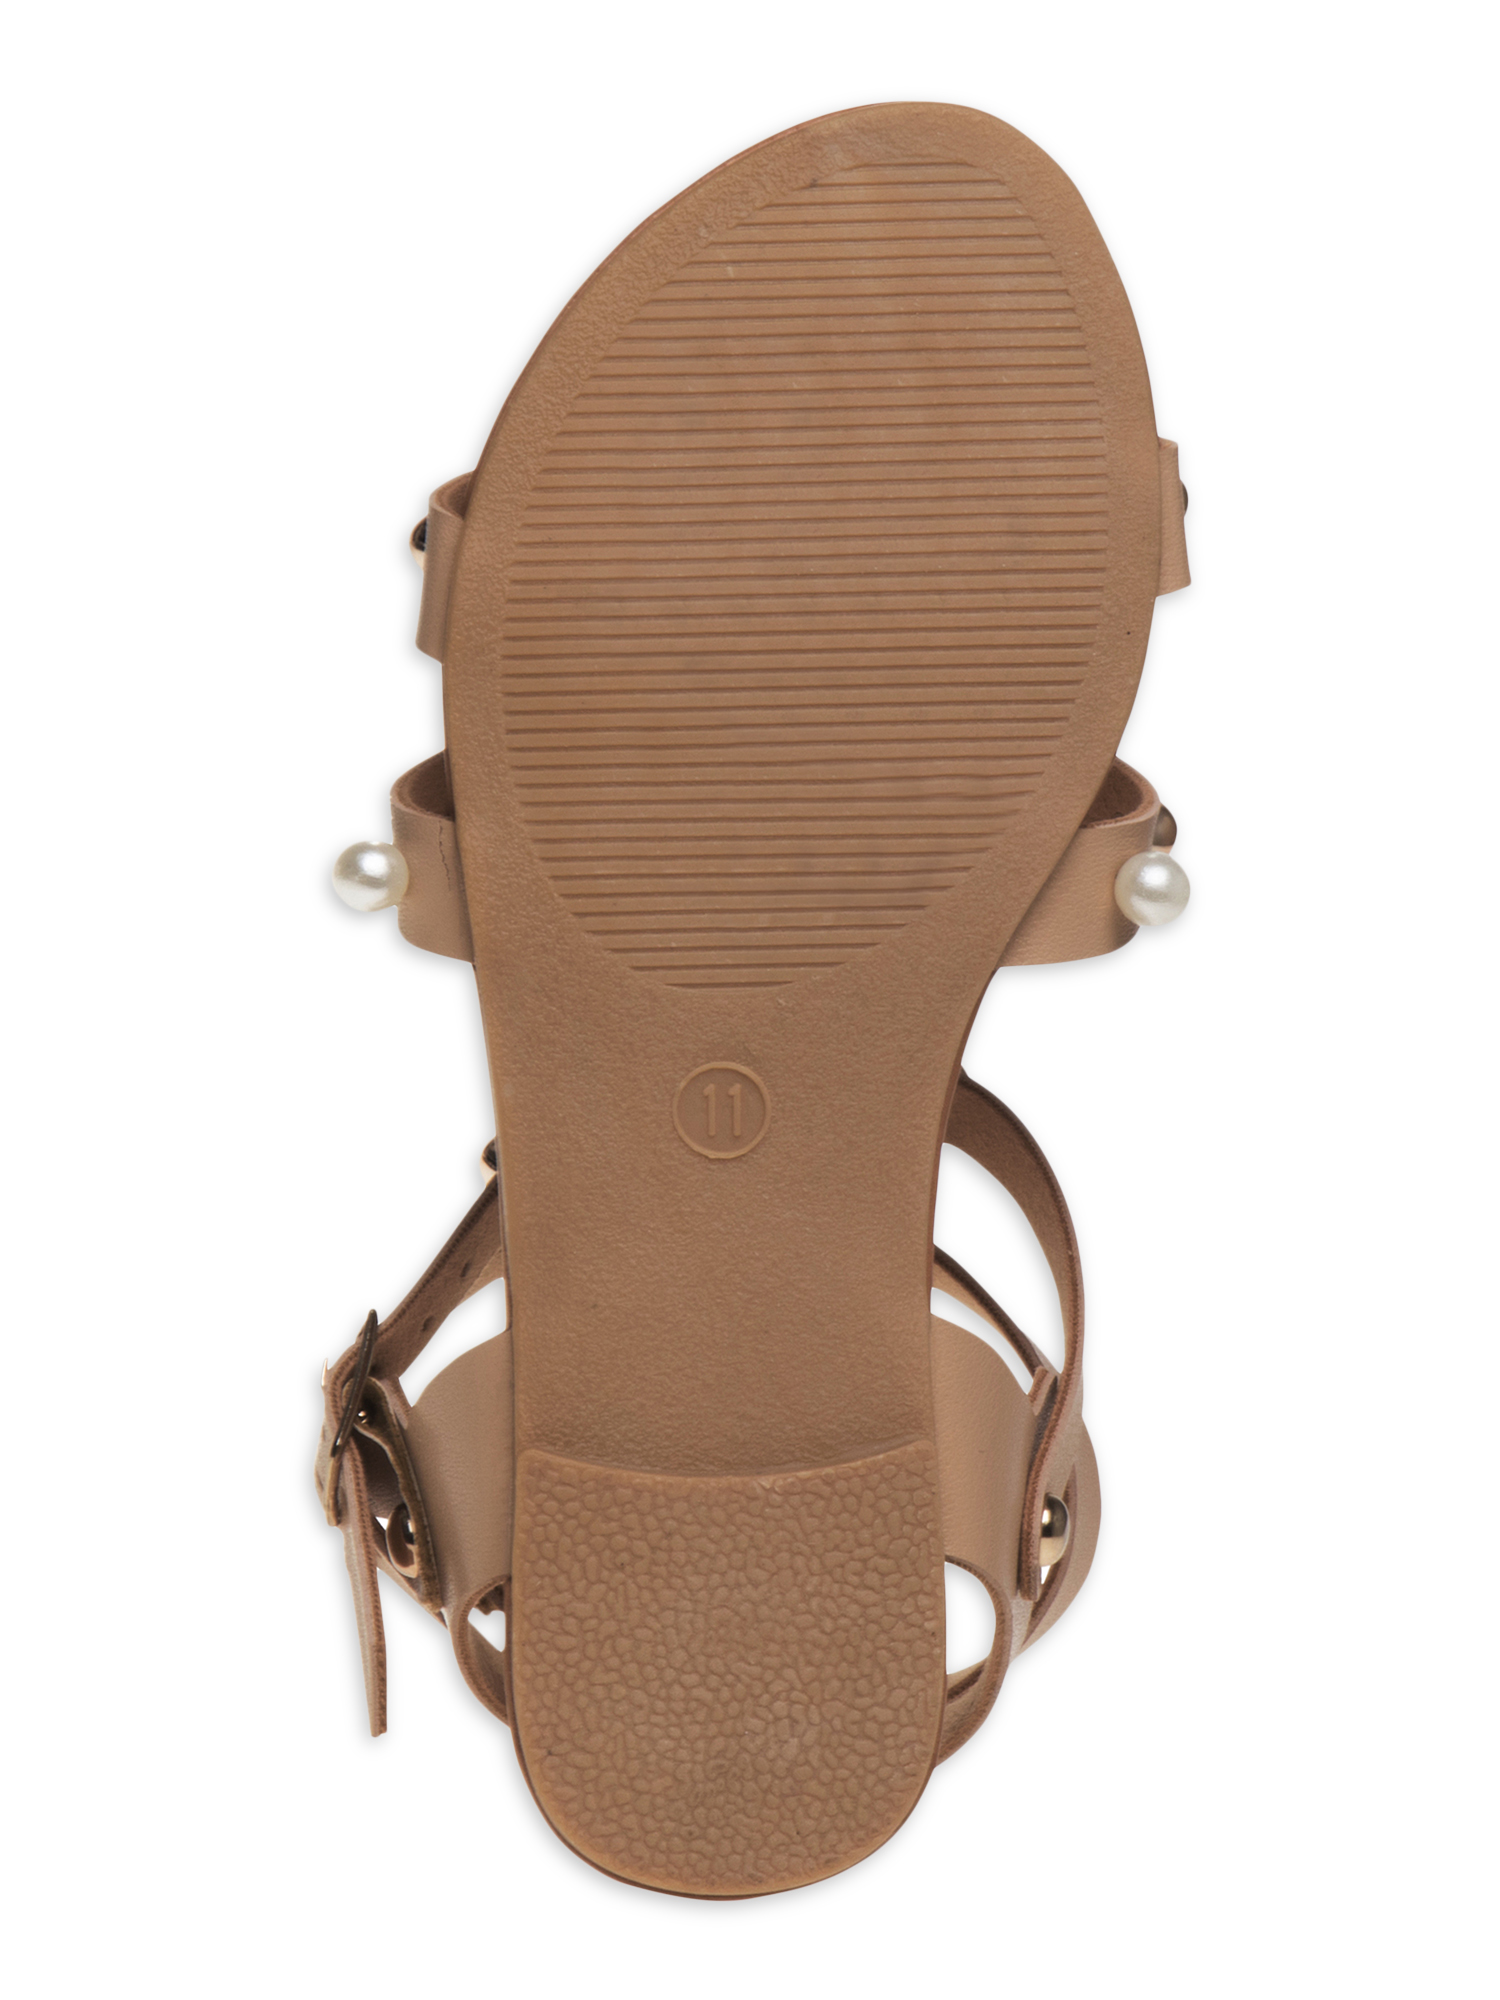 Nanette Lepore Pearls N' Twirls Fashion Sandals (Little Girl & Big Girls) - image 5 of 5